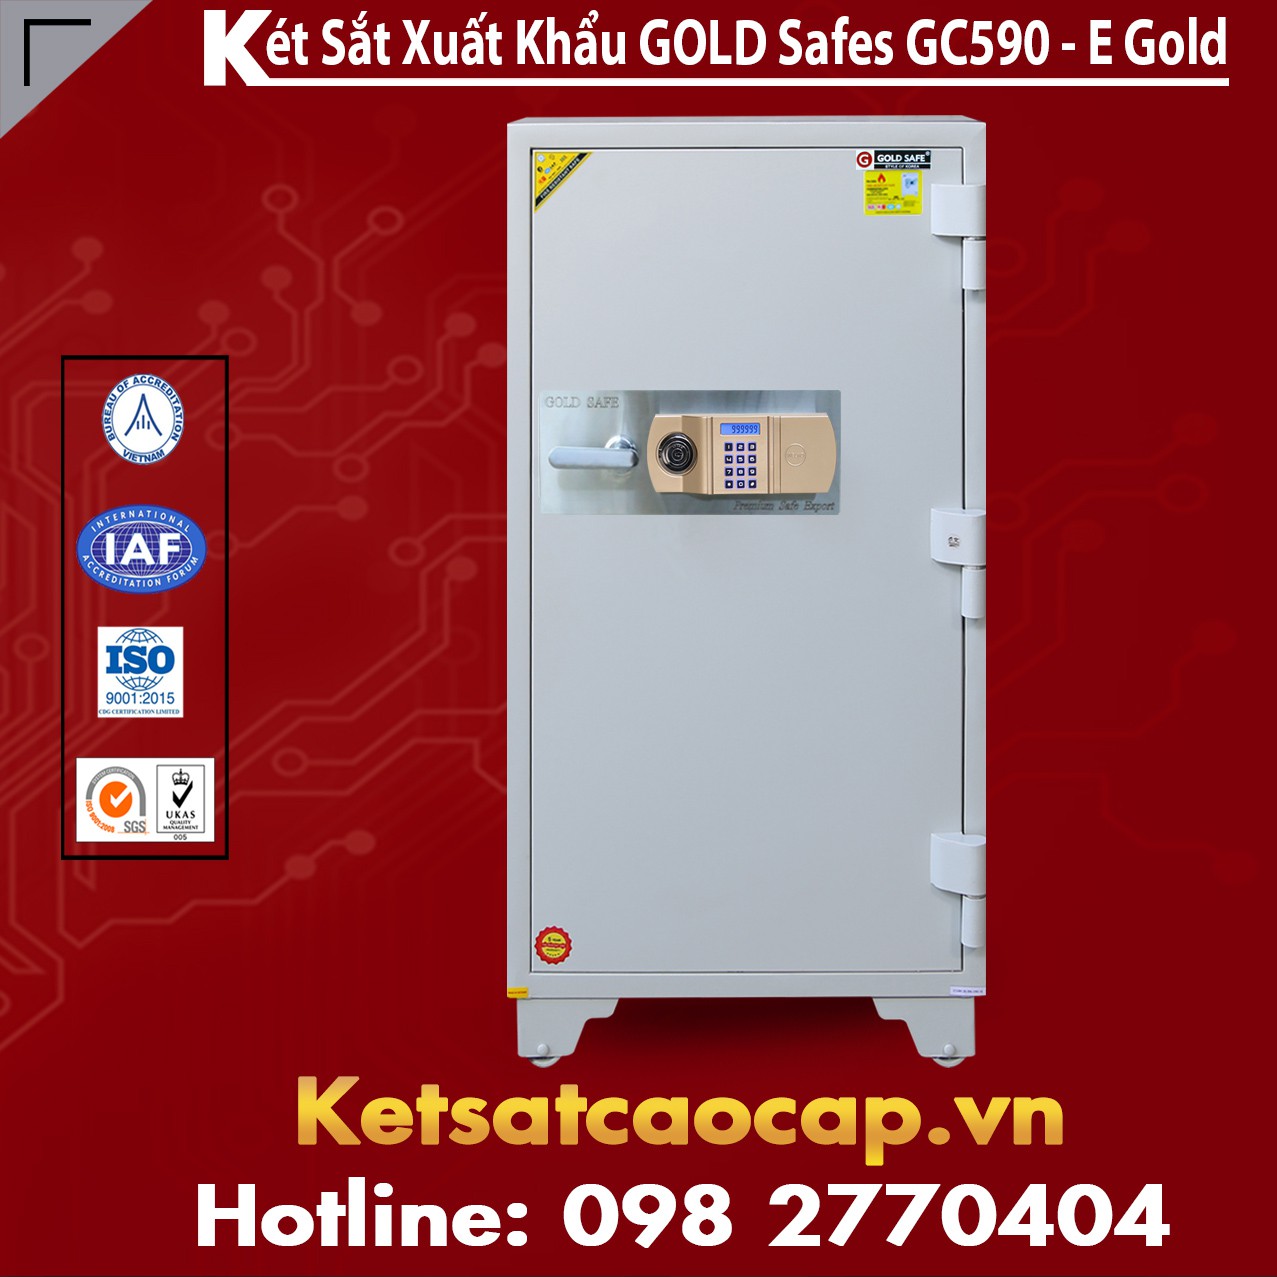 Két Sắt Thịnh Vượng GOLD SAFES GC590 E Gold